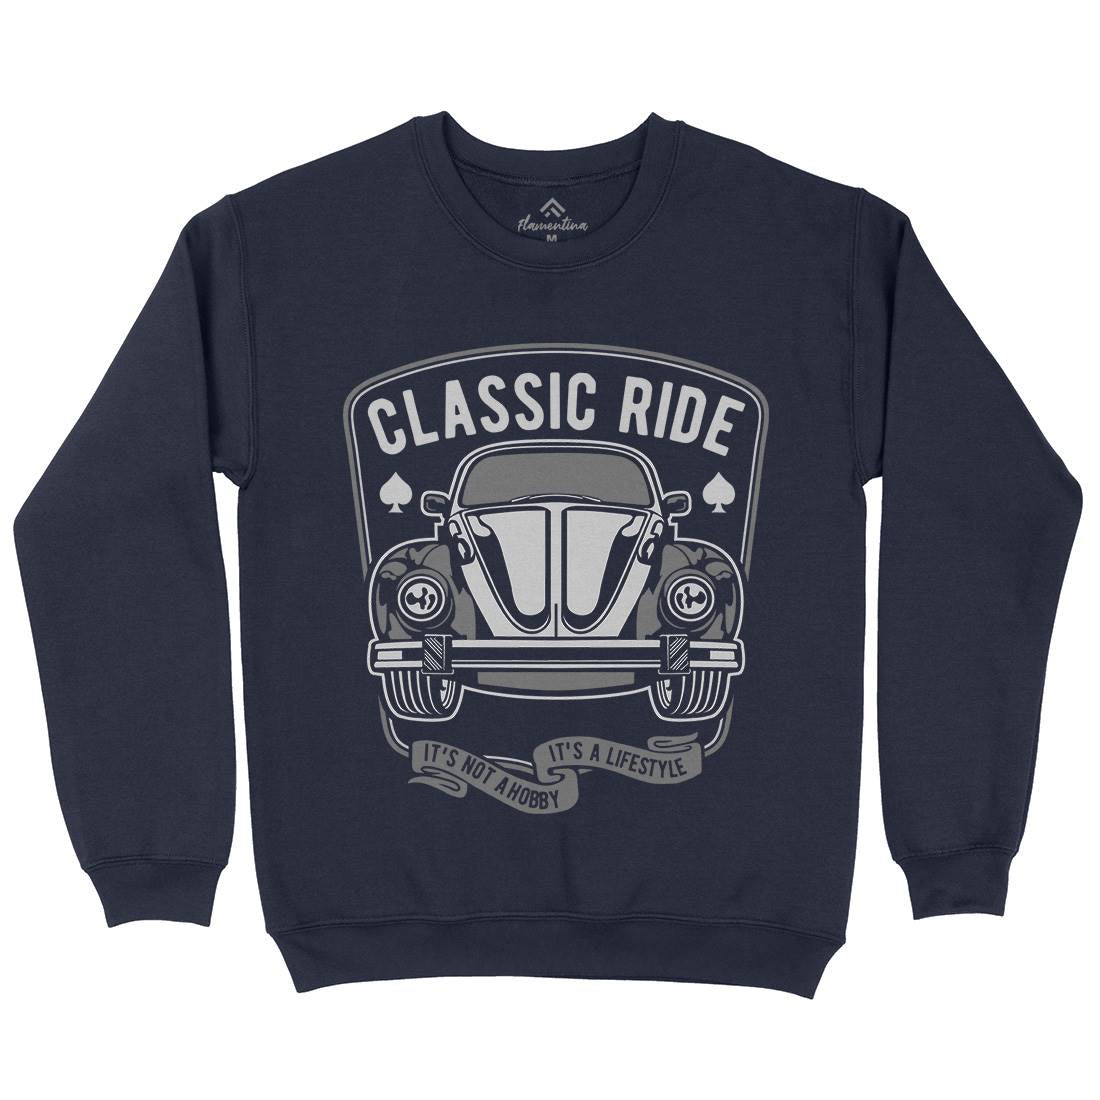 Classic Ride Kids Crew Neck Sweatshirt Cars B195